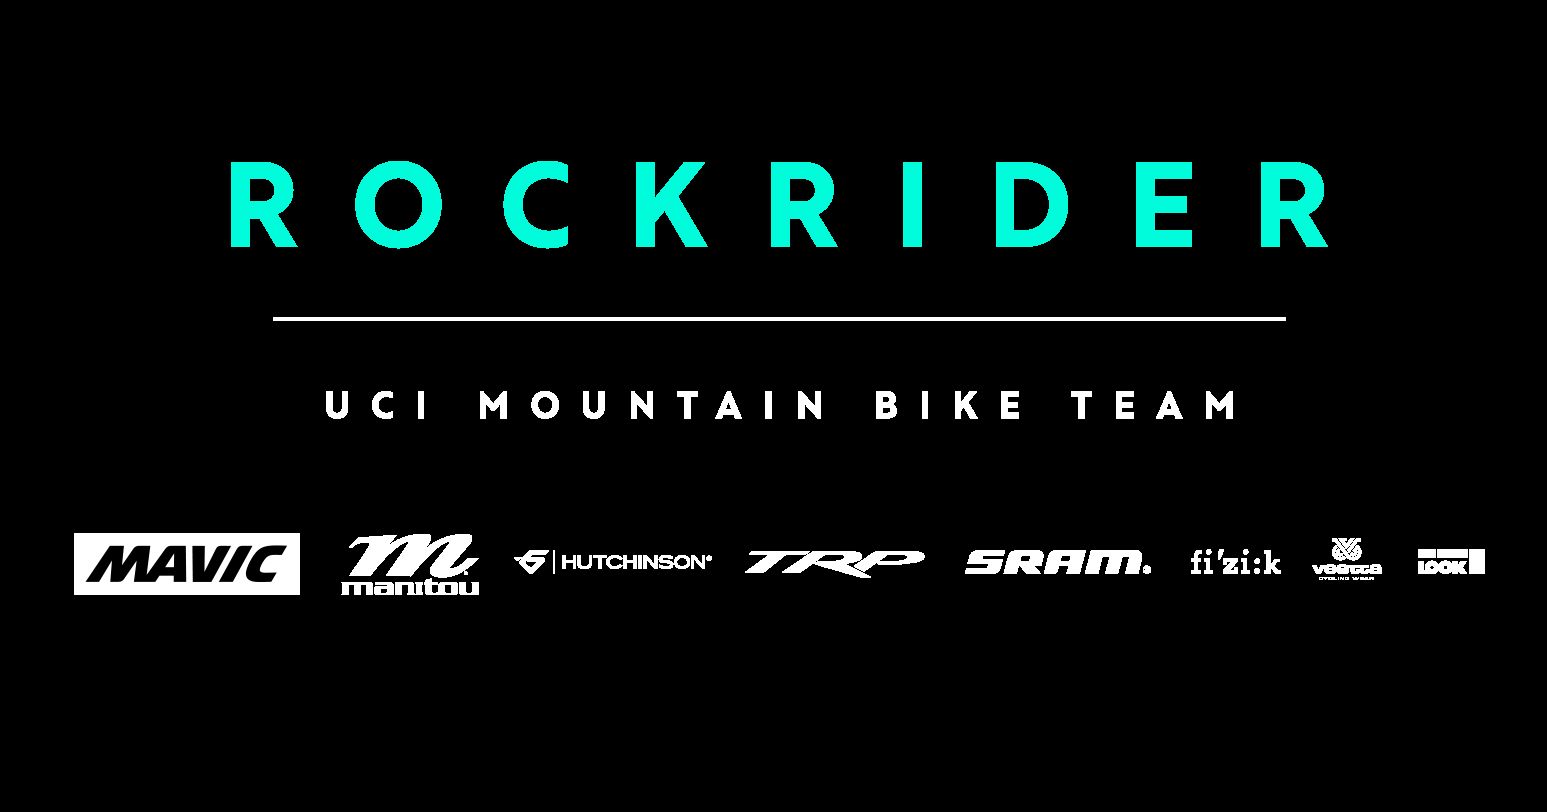 rockrider uci mountain bike team logo